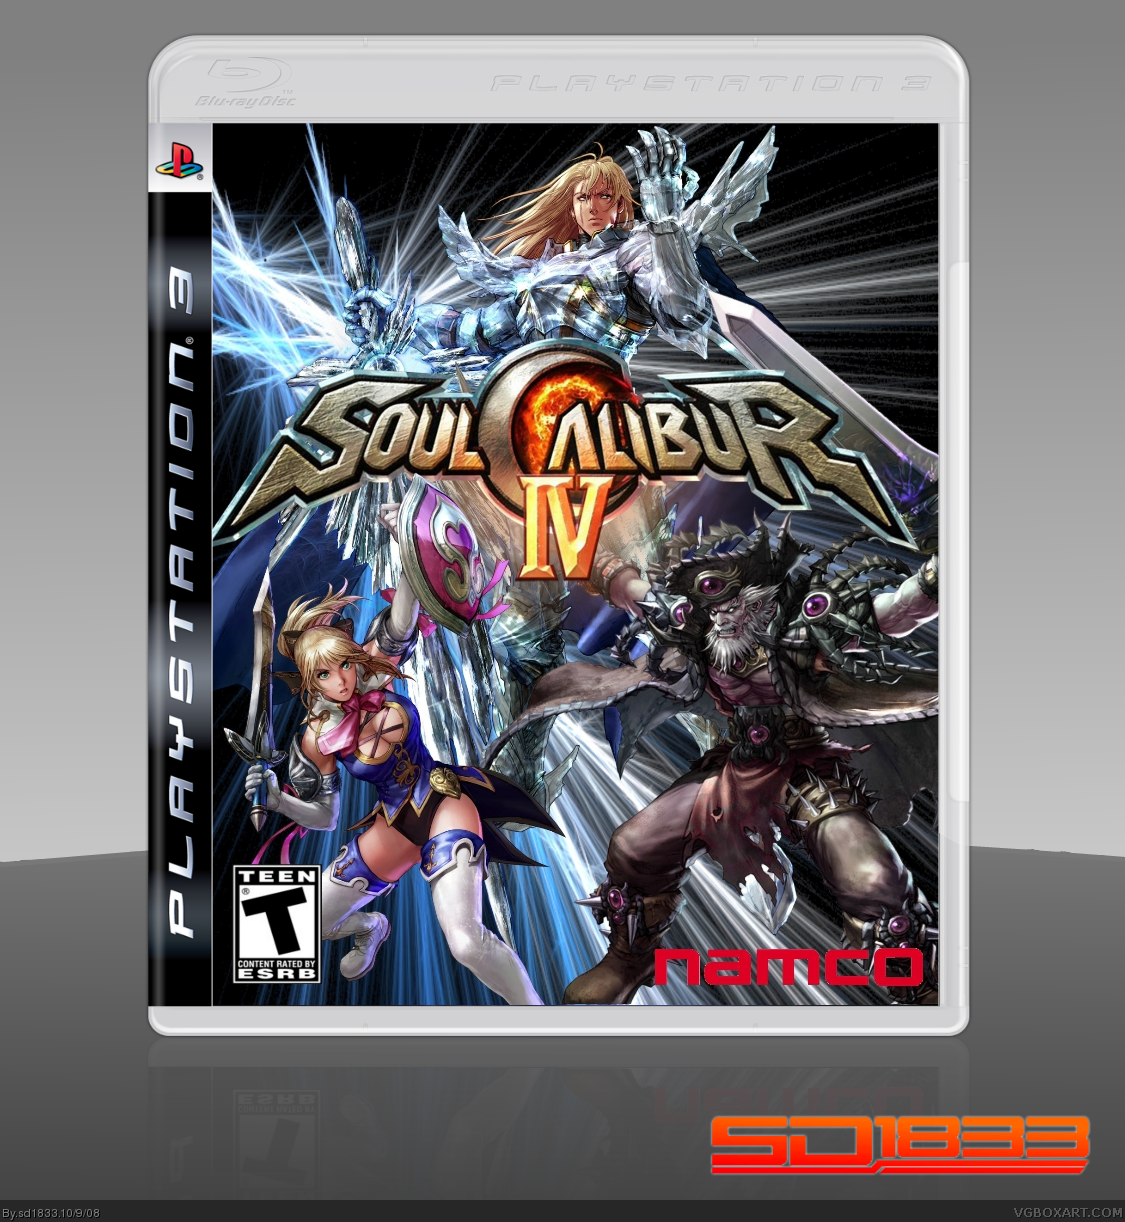 Soulcalibur IV box cover